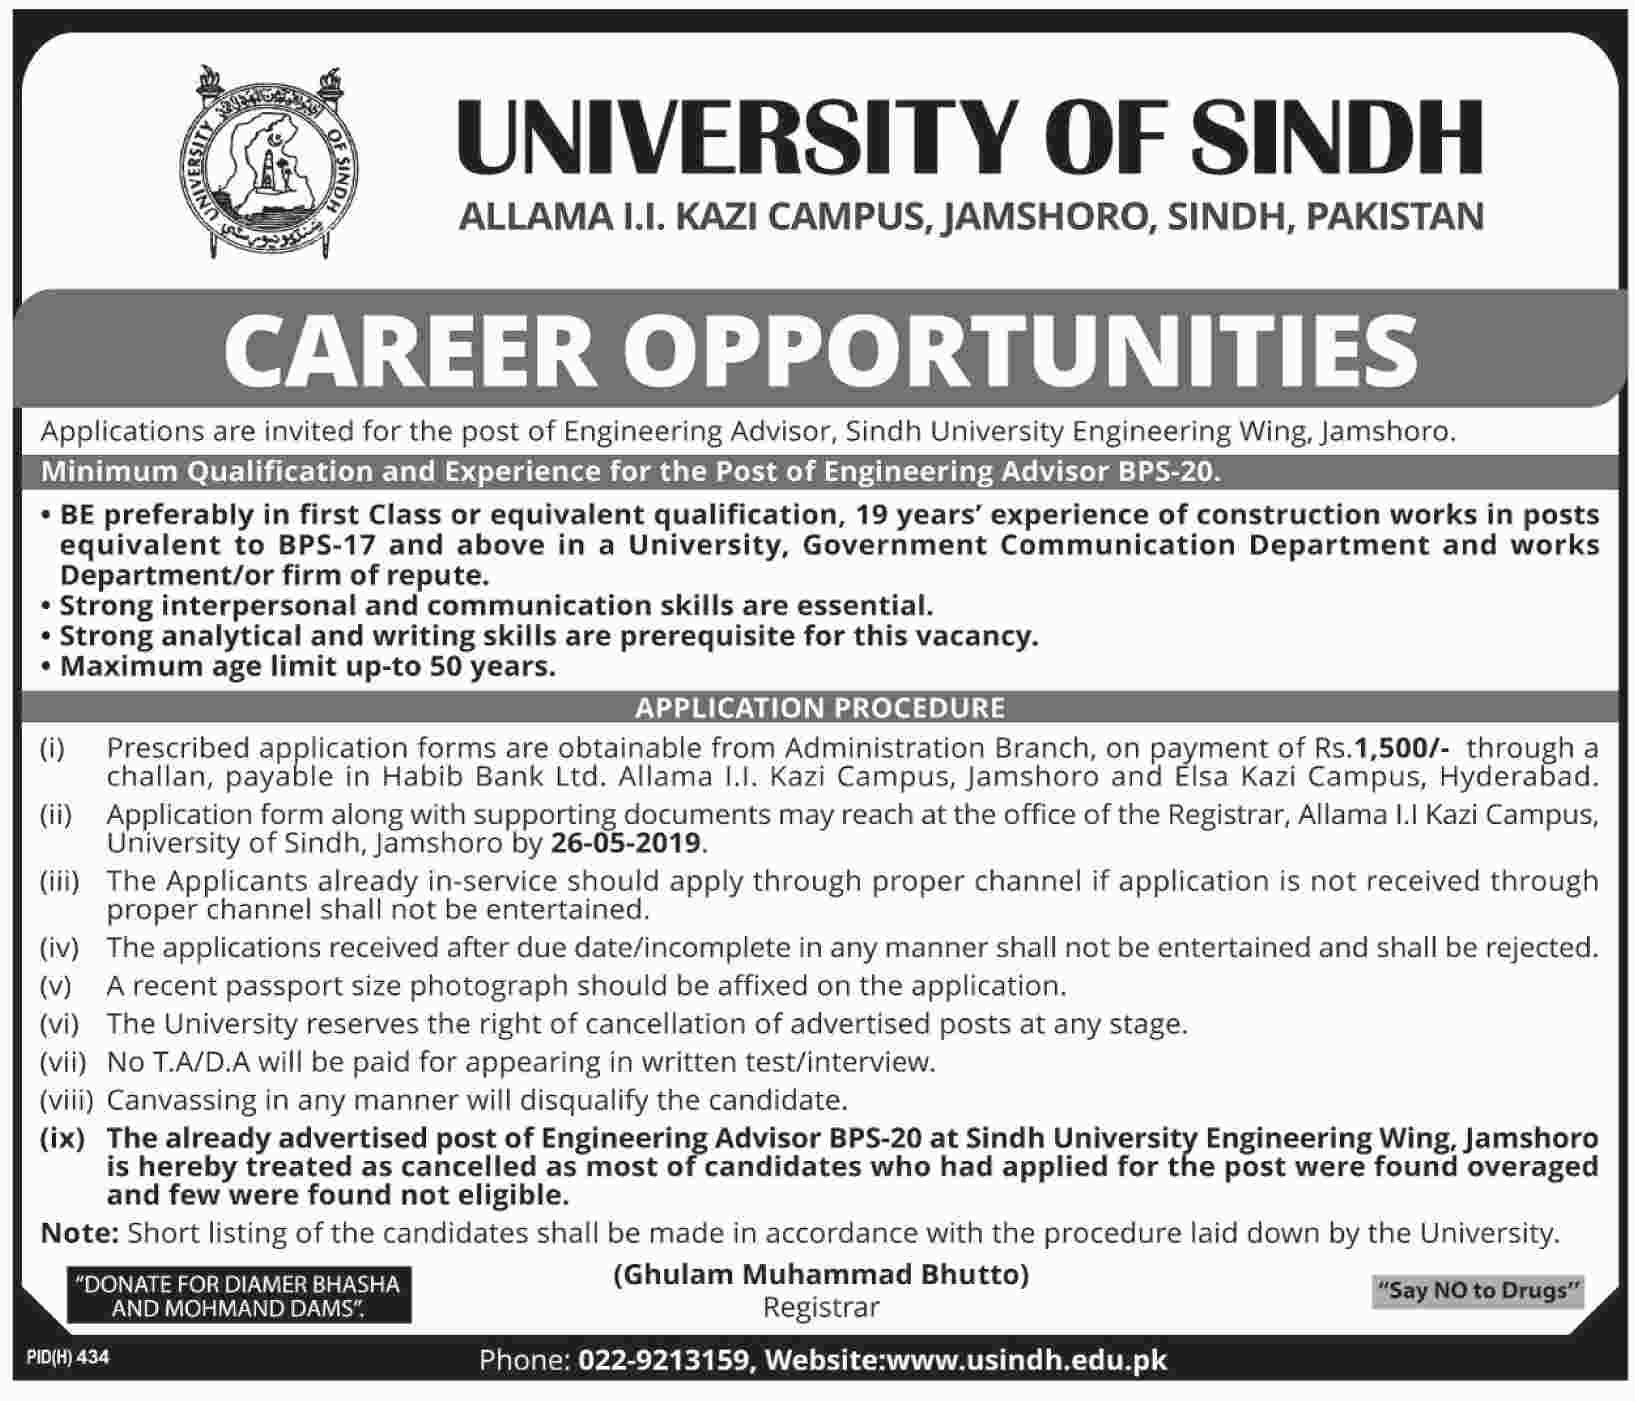 University of Sindh jobs 2019